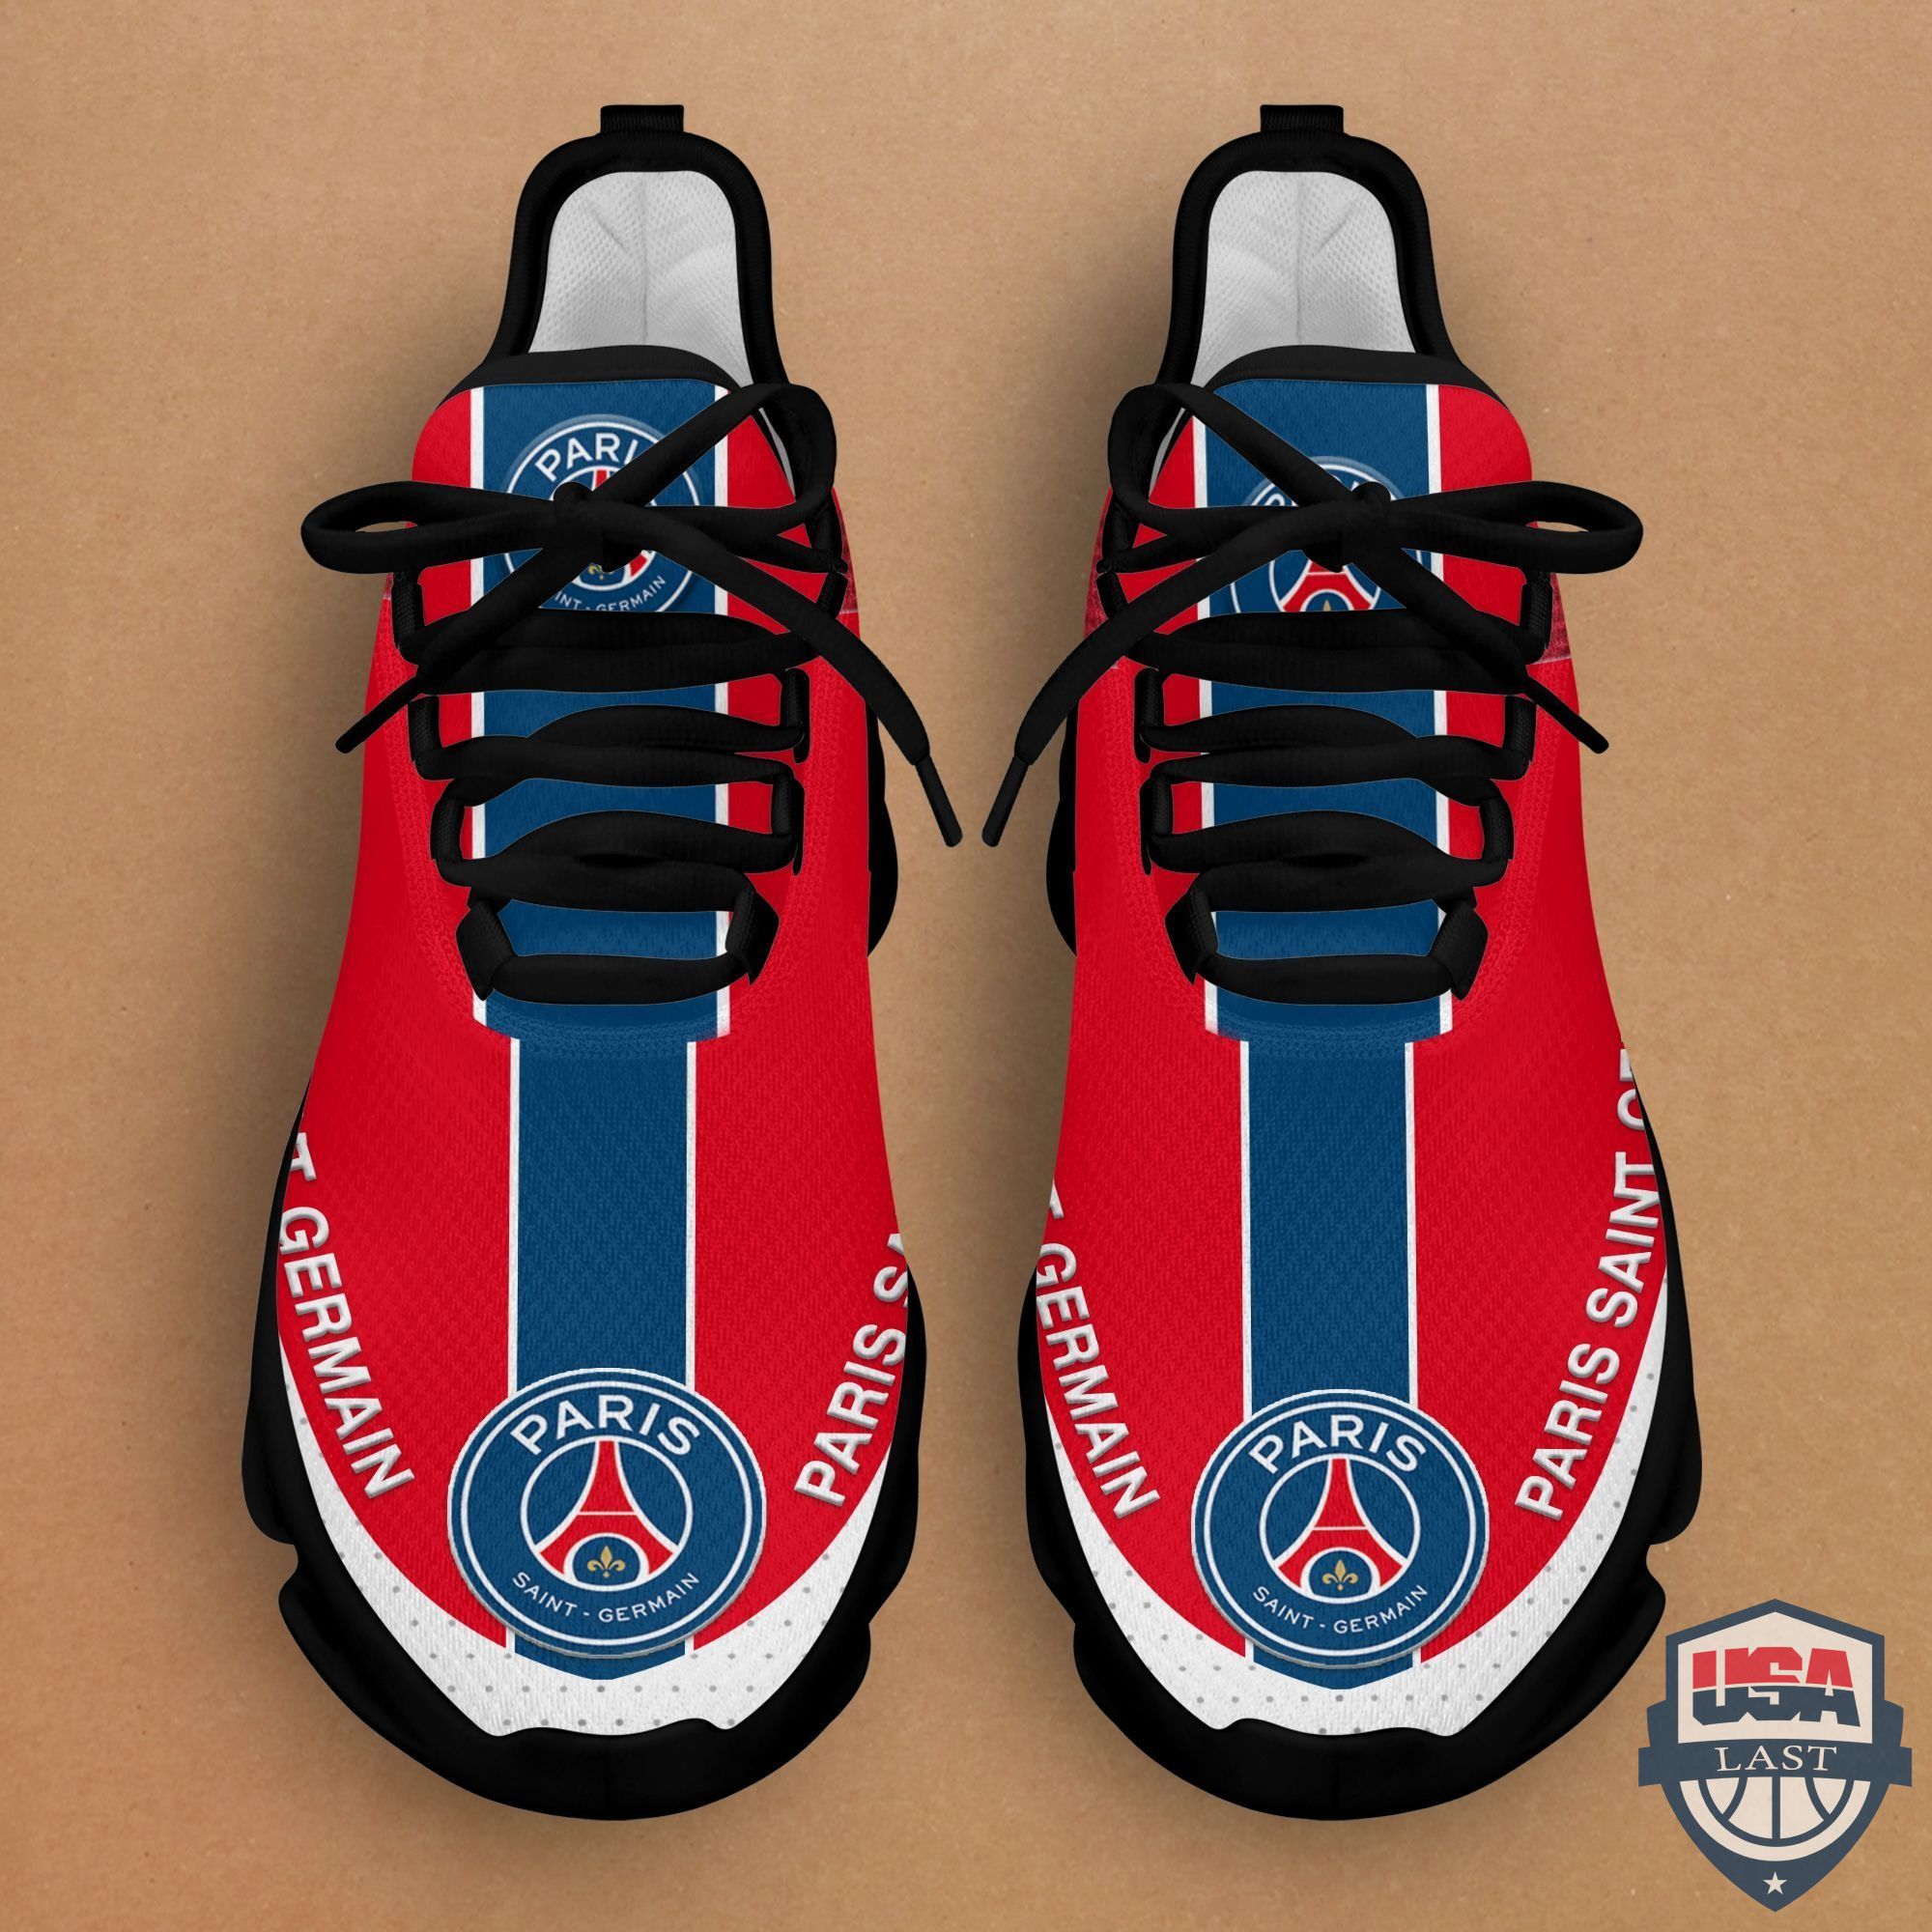 Top Trending – Paris Saint Germain Max Soul Shoes Red Version